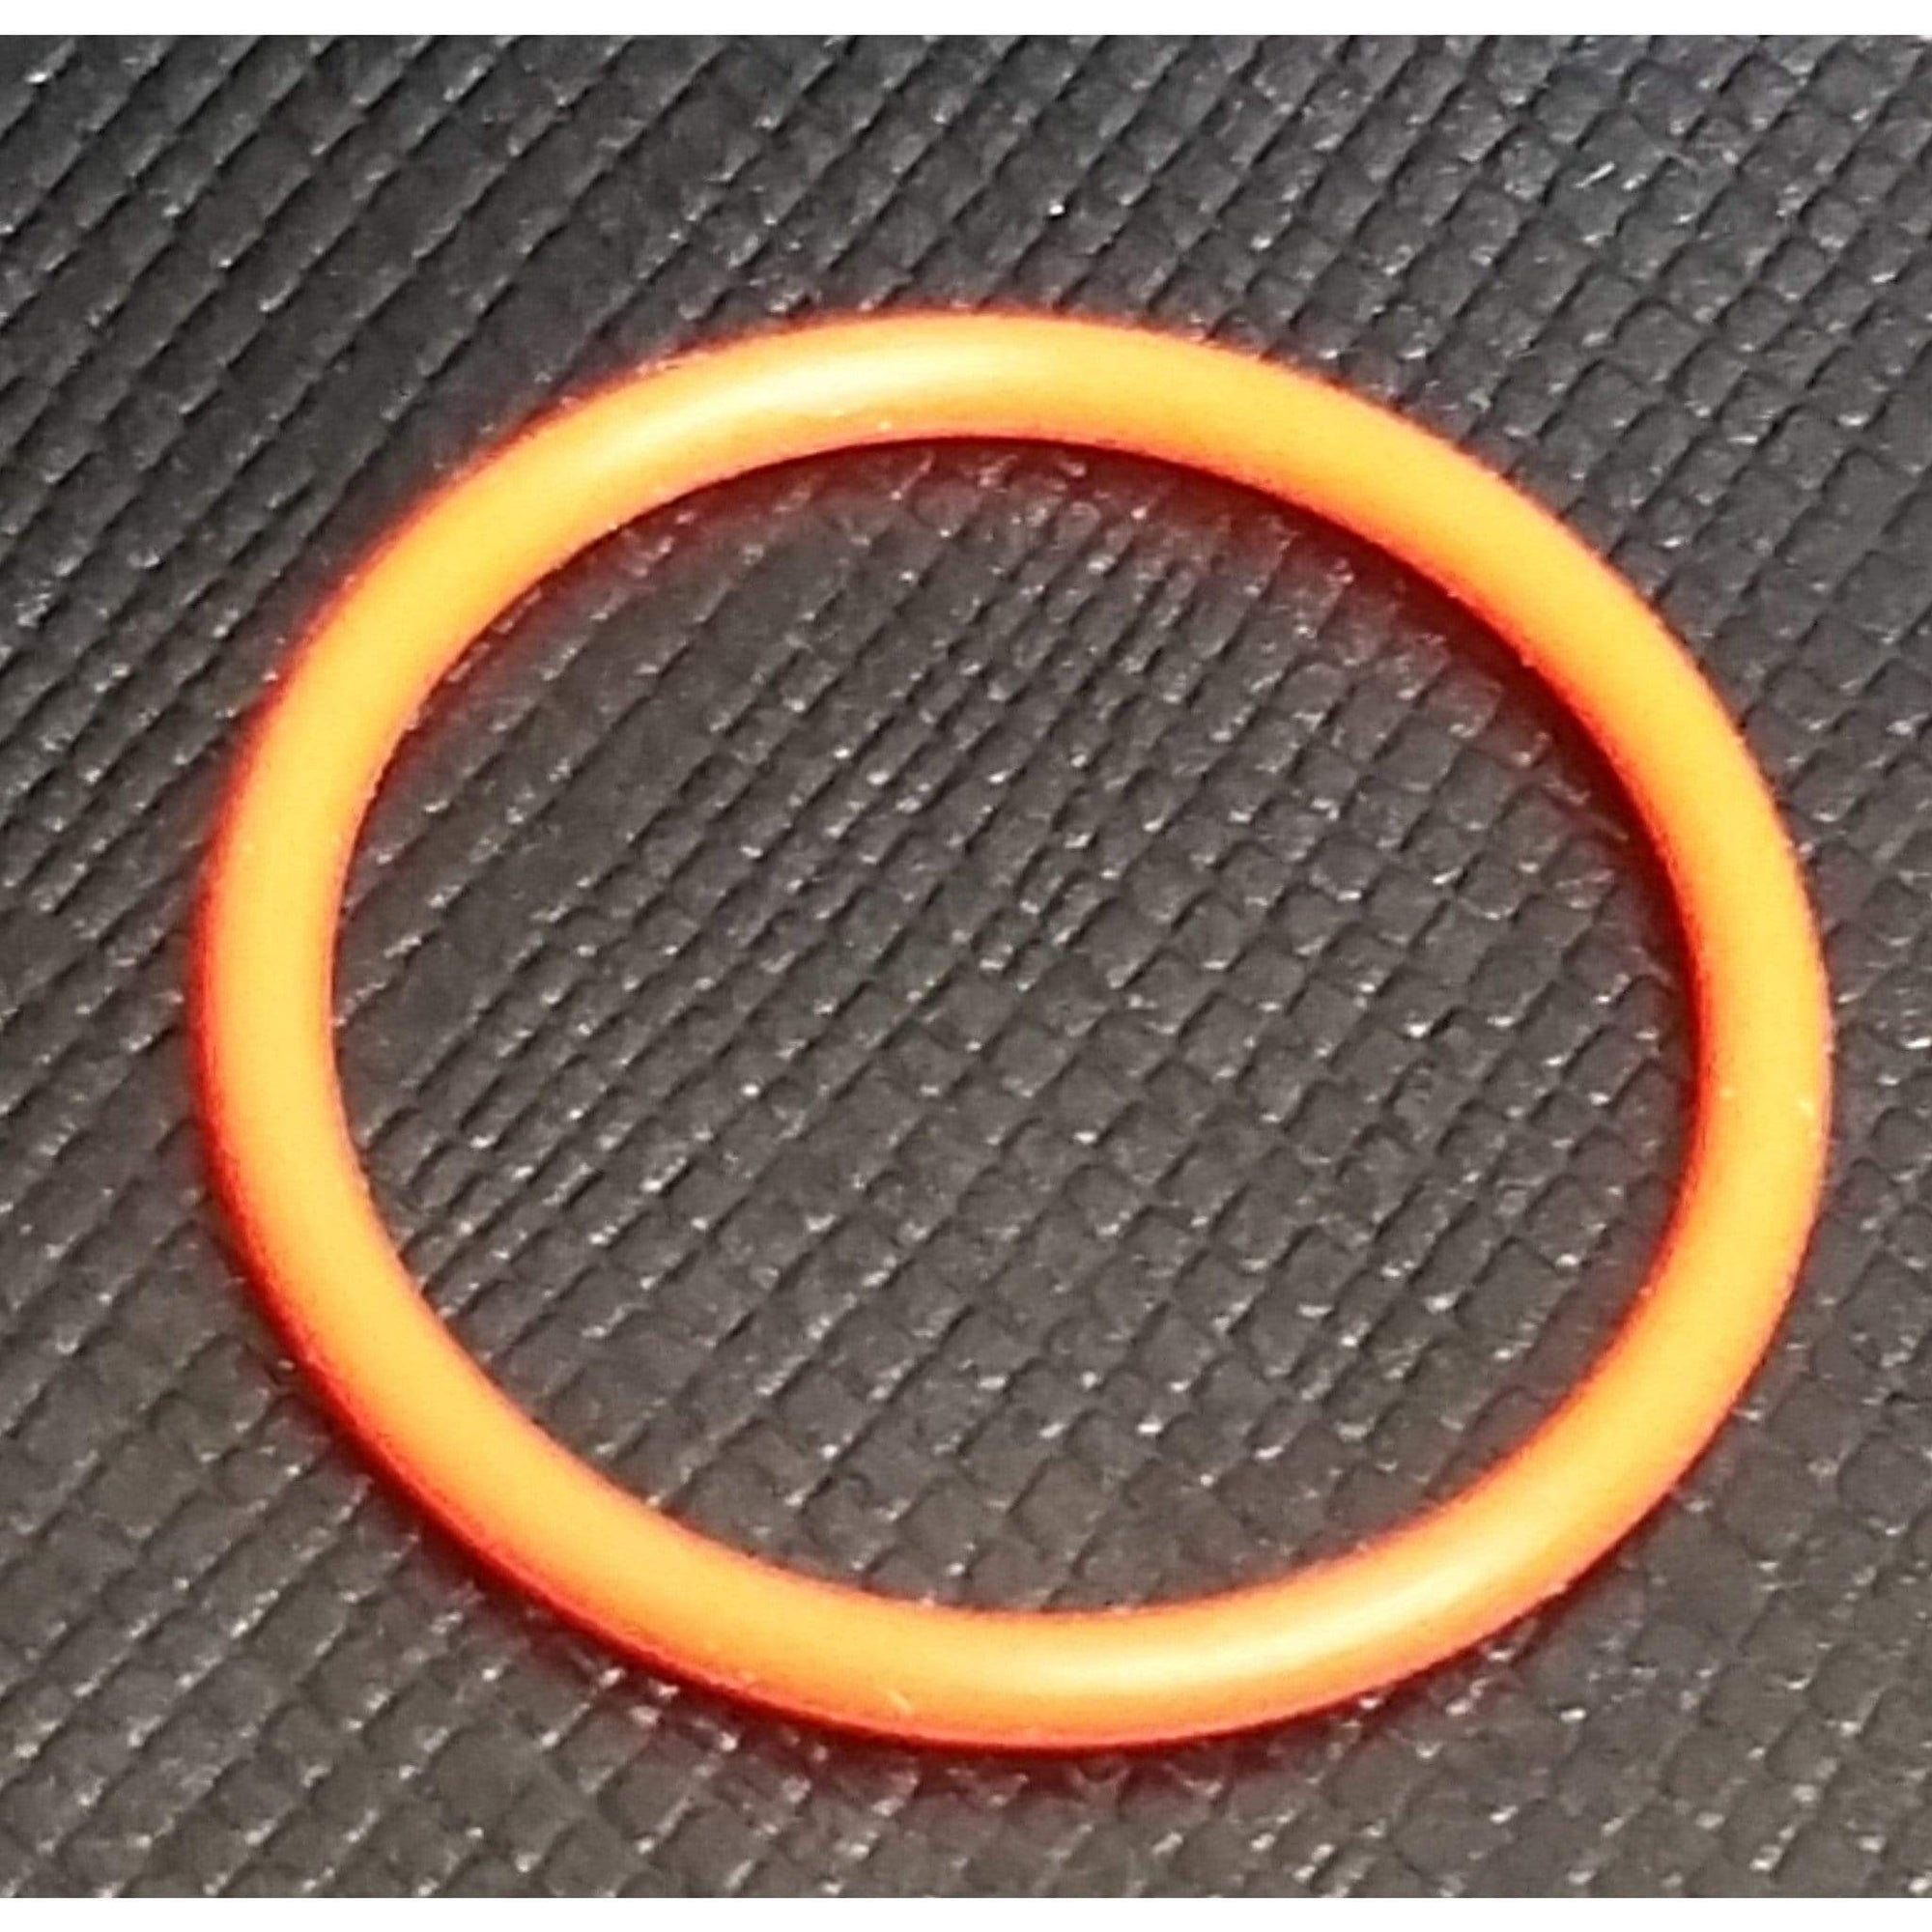 TFV8 Replacement Seals Top Glass Oring Orange Seals/Oring's